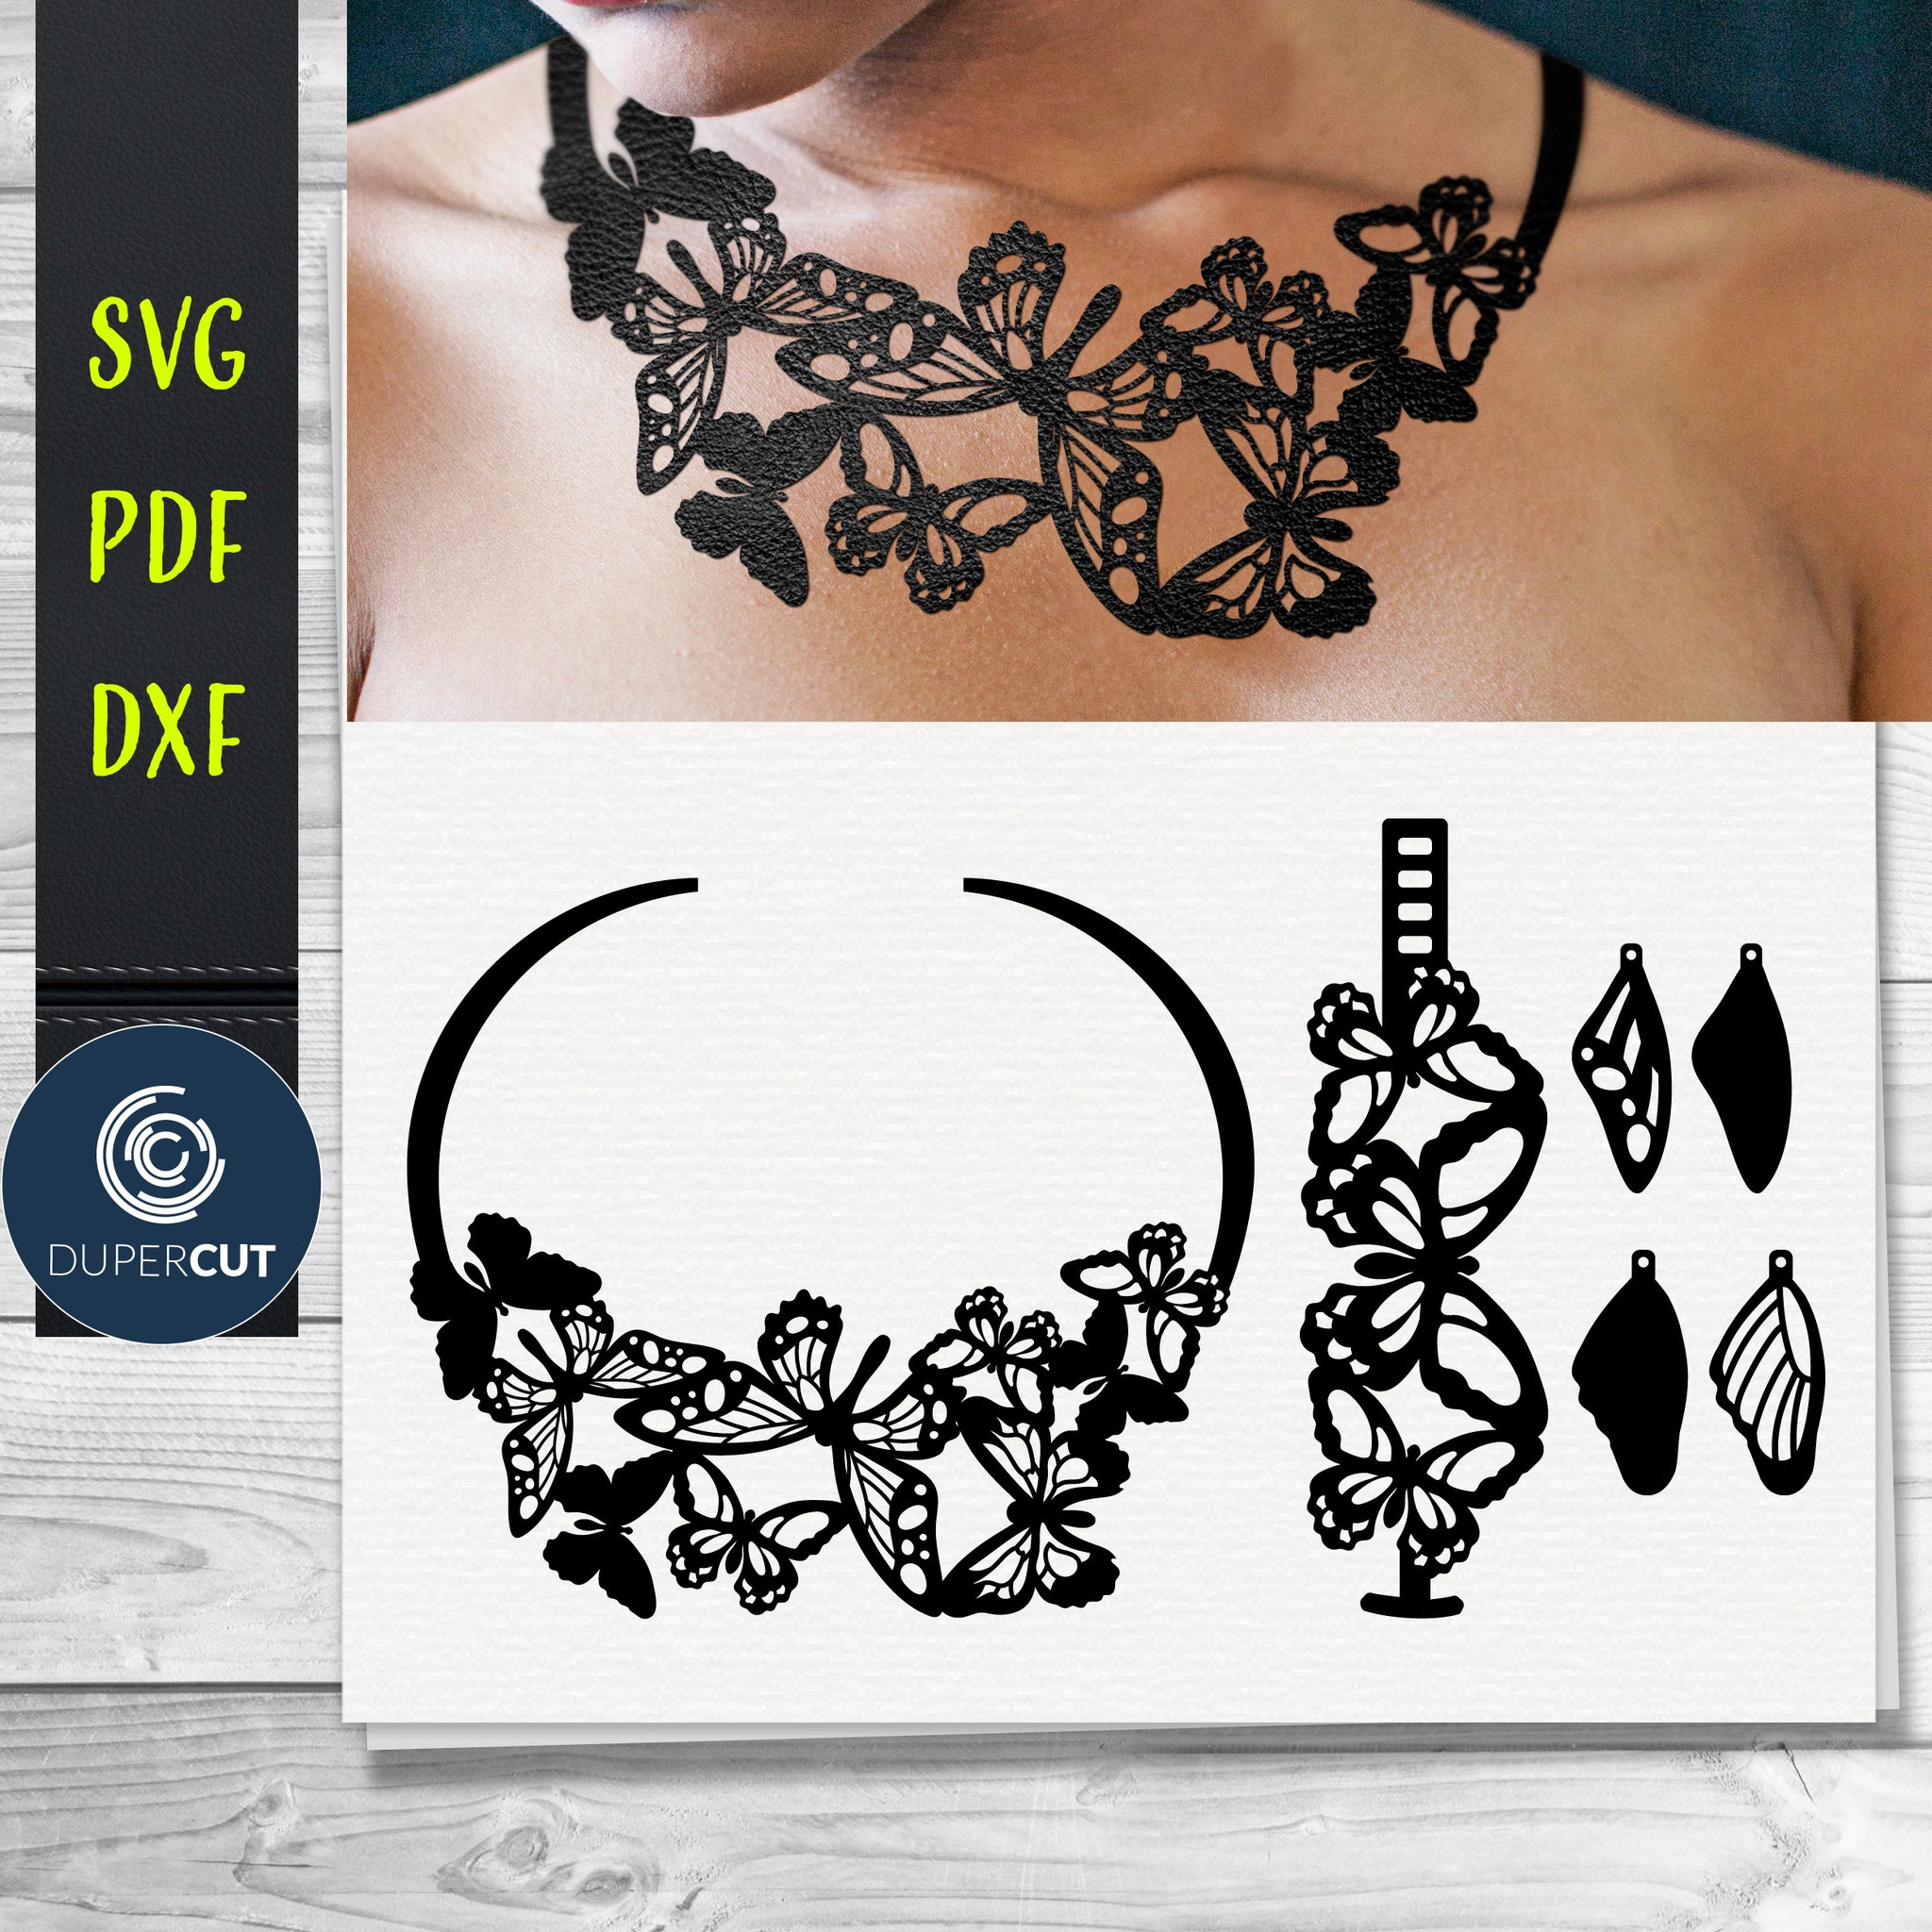 Leather Bracelets Template SVG Bundle Graphic by Versatile Tshirt   Creative Fabrica